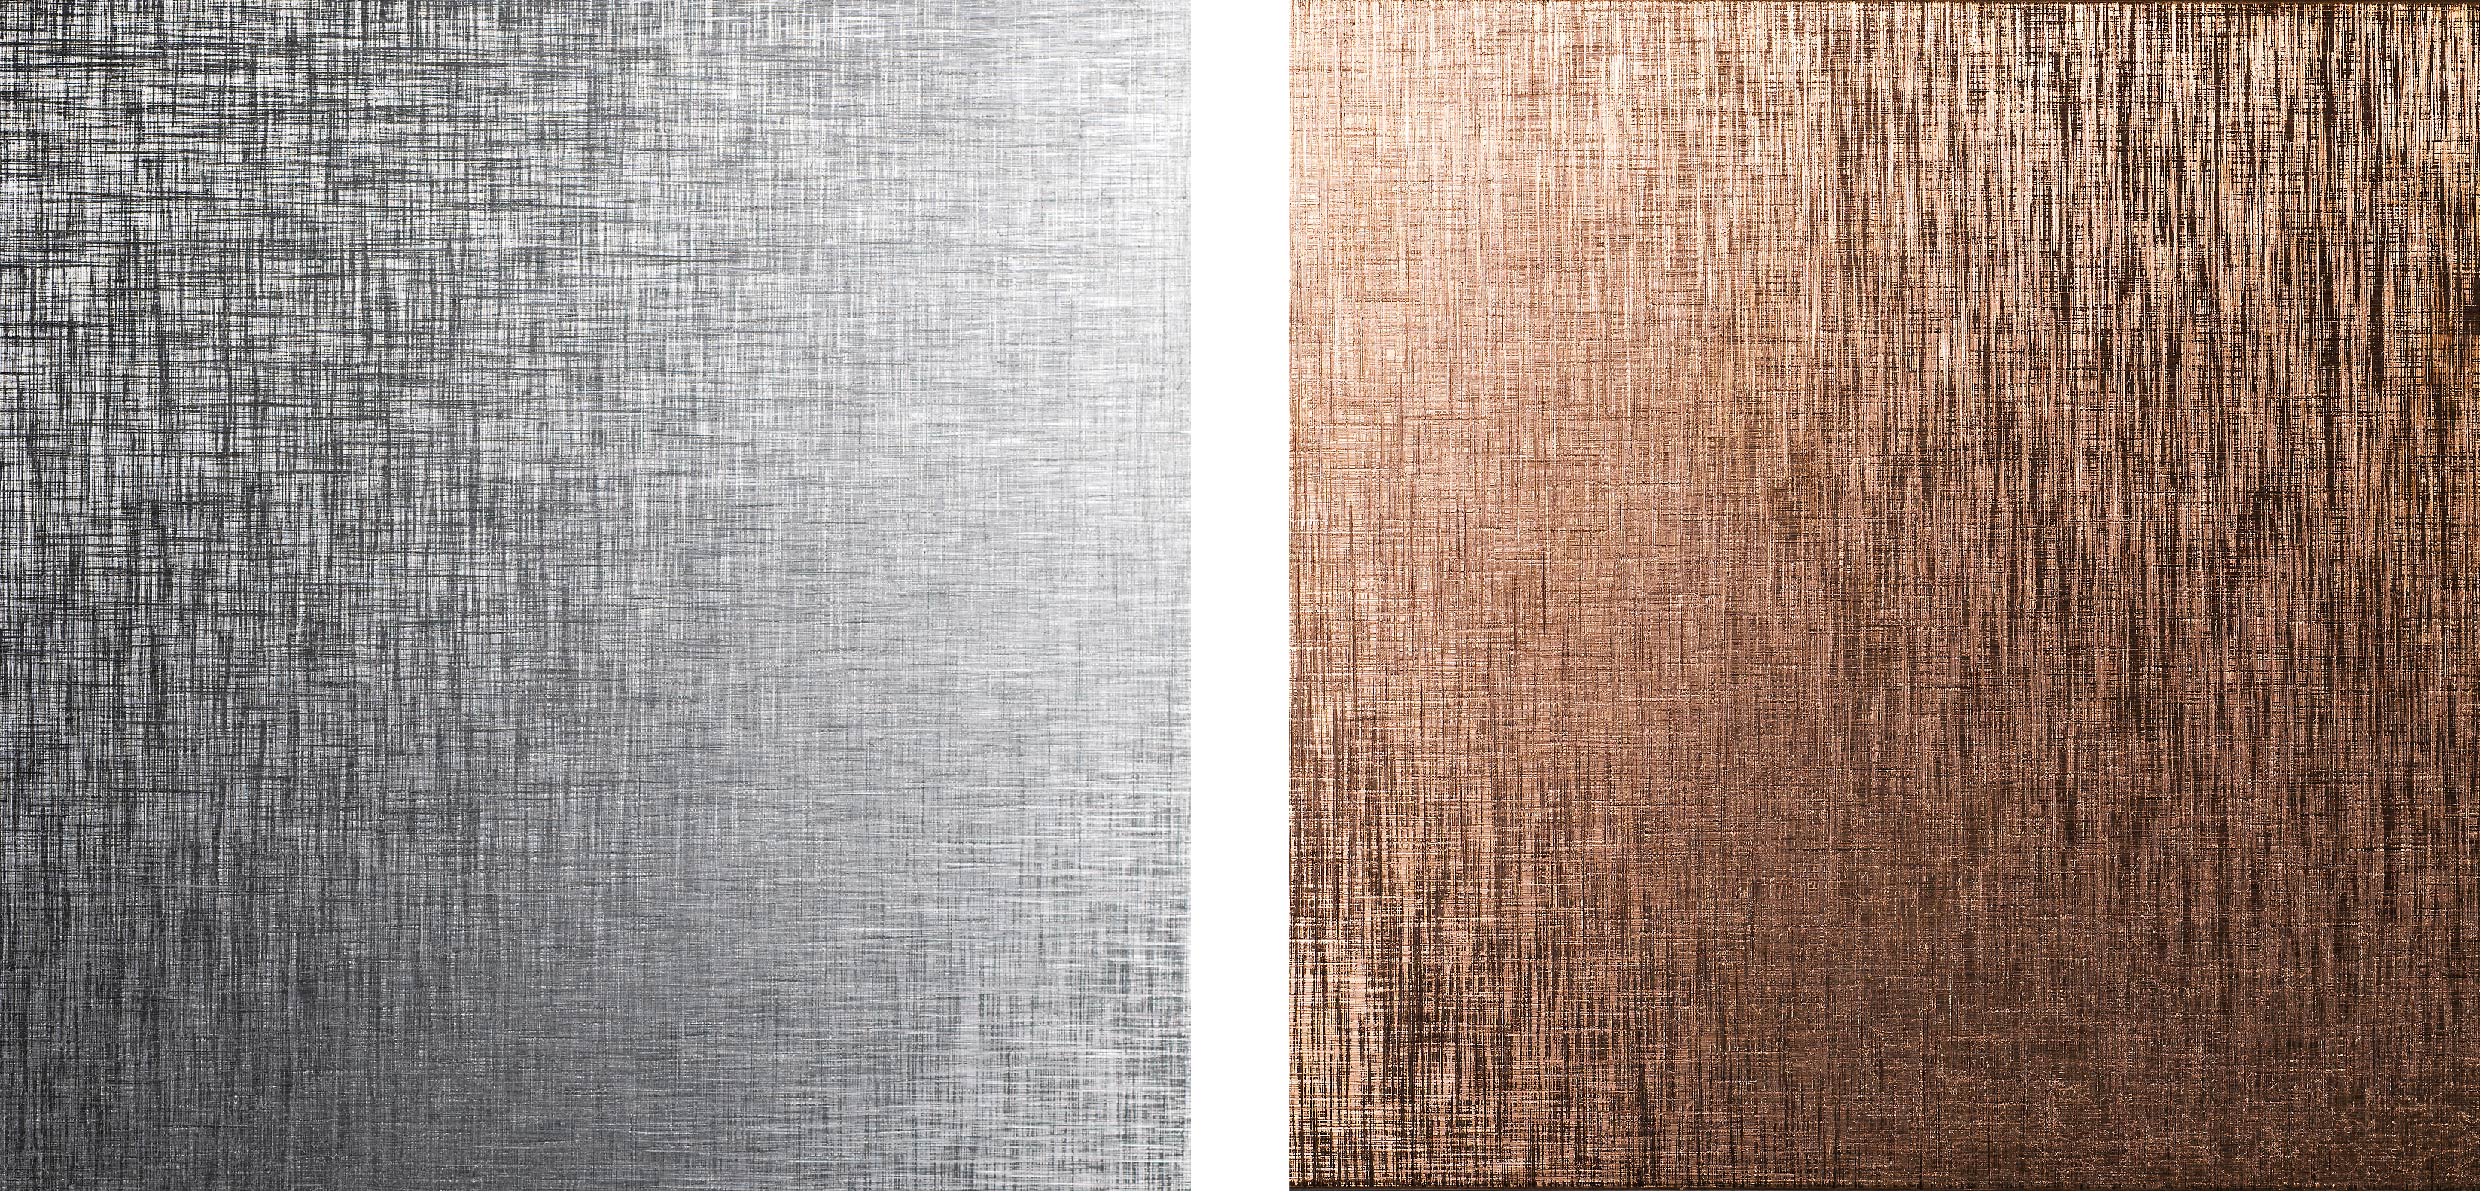 Planium steel and copper textures